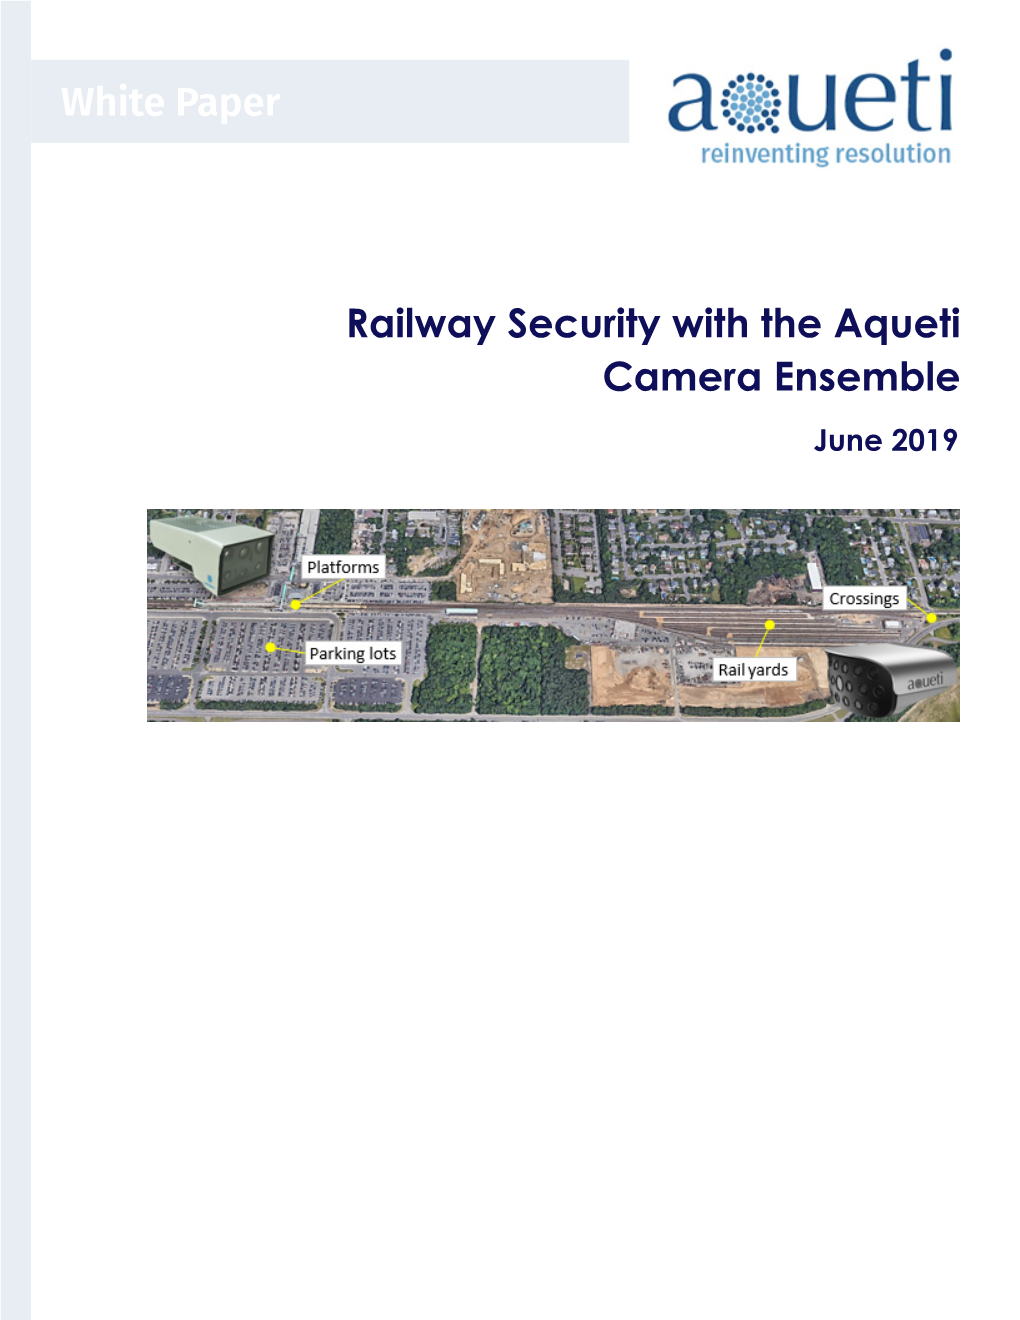 White Paper Railway Security with the Aqueti Camera Ensemble